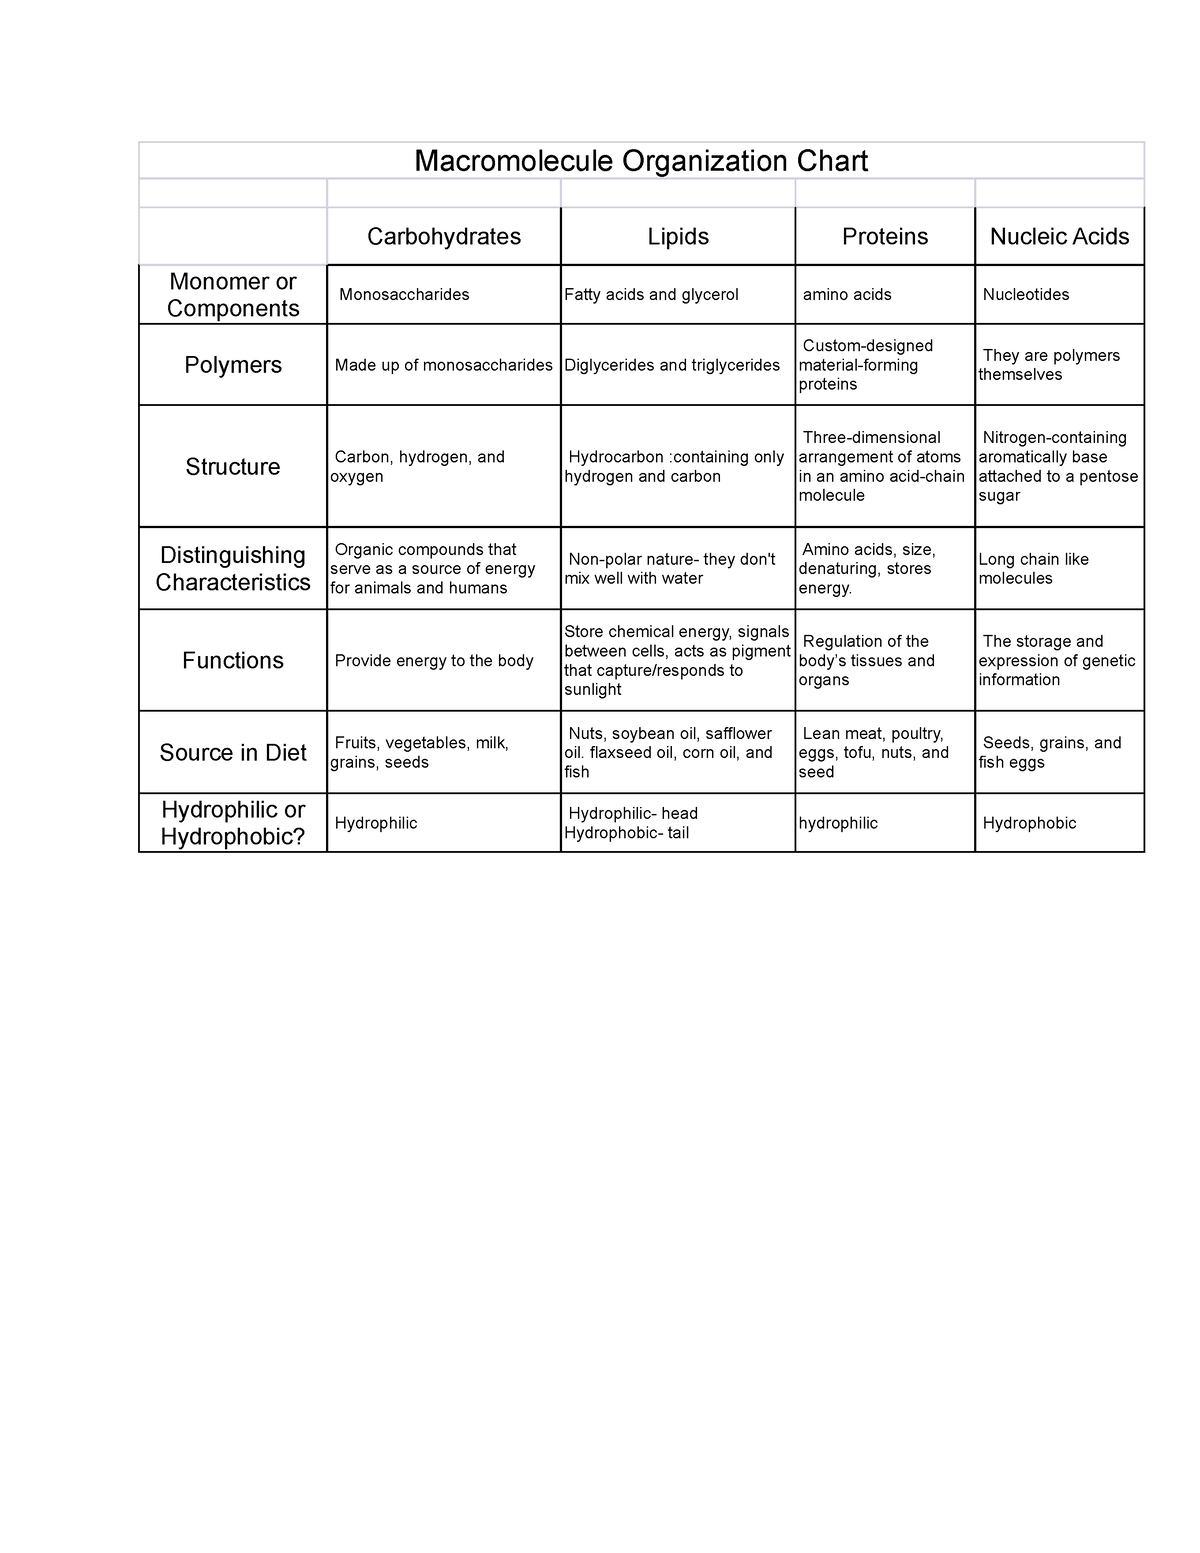 Macromolecule Organization Chart Macromolecule Organization Chart